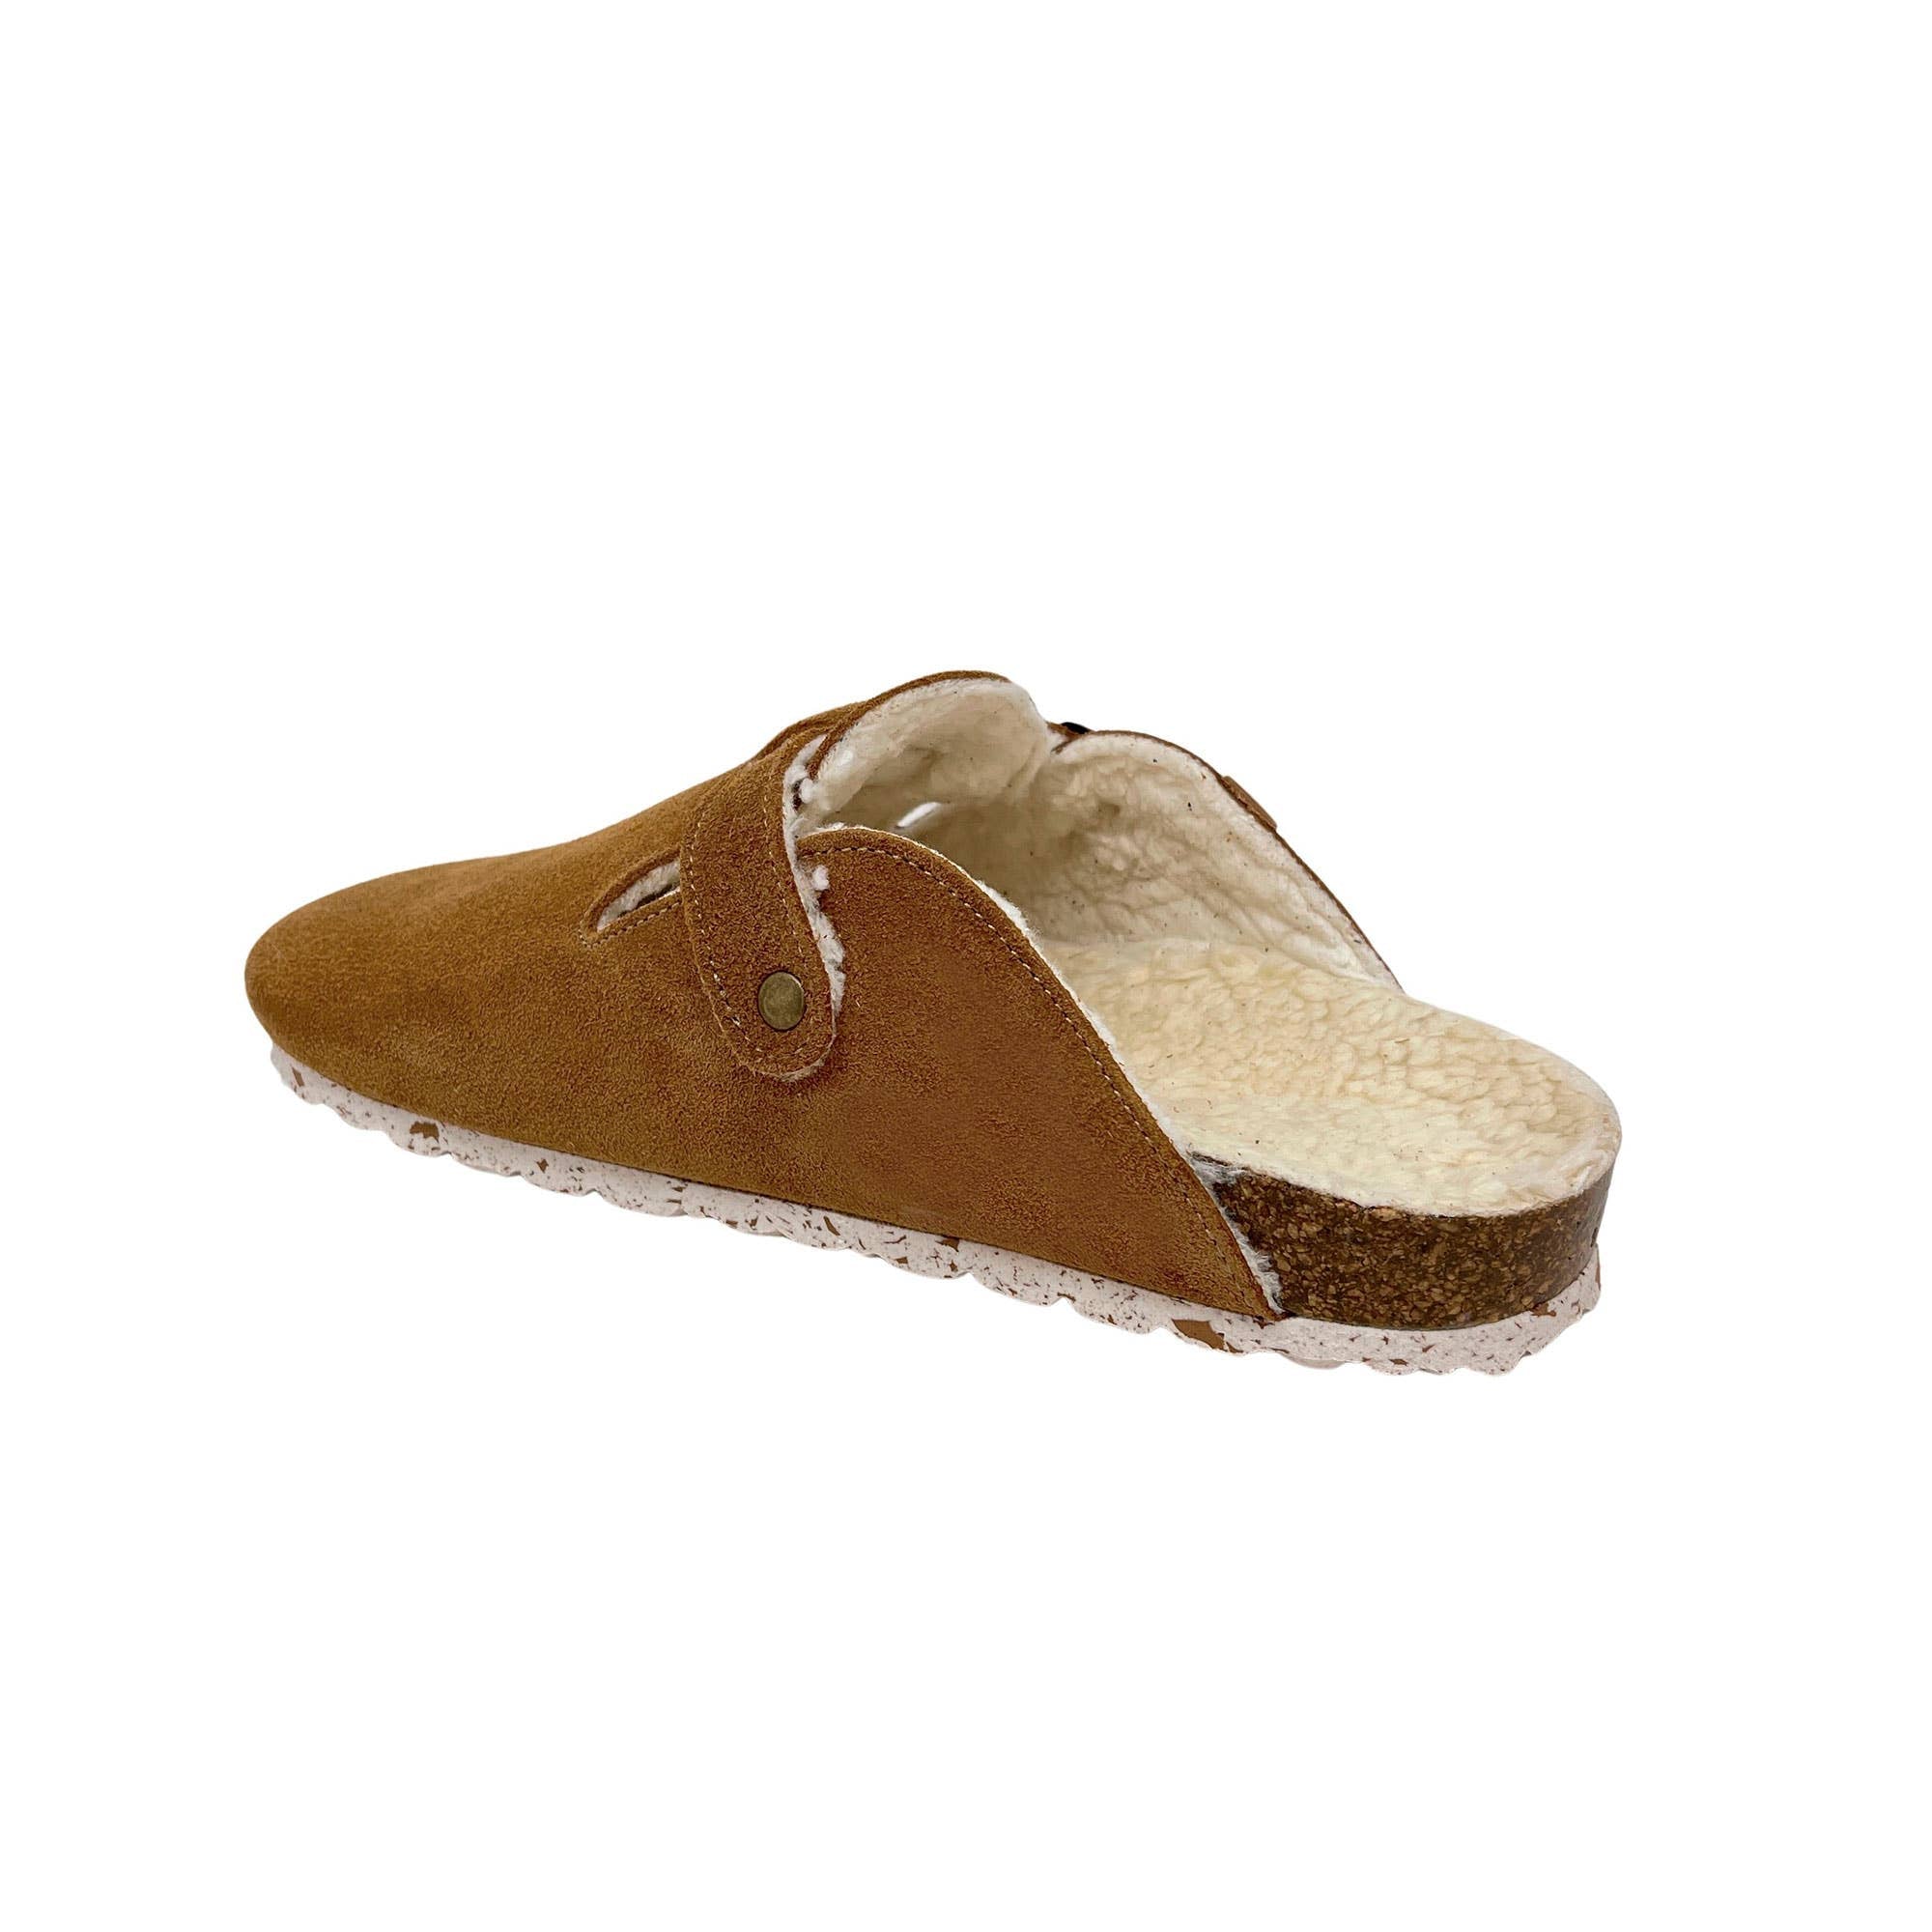 CozyFeet Slippers: Happy Light Brown Footwear for Ultimate Comfort